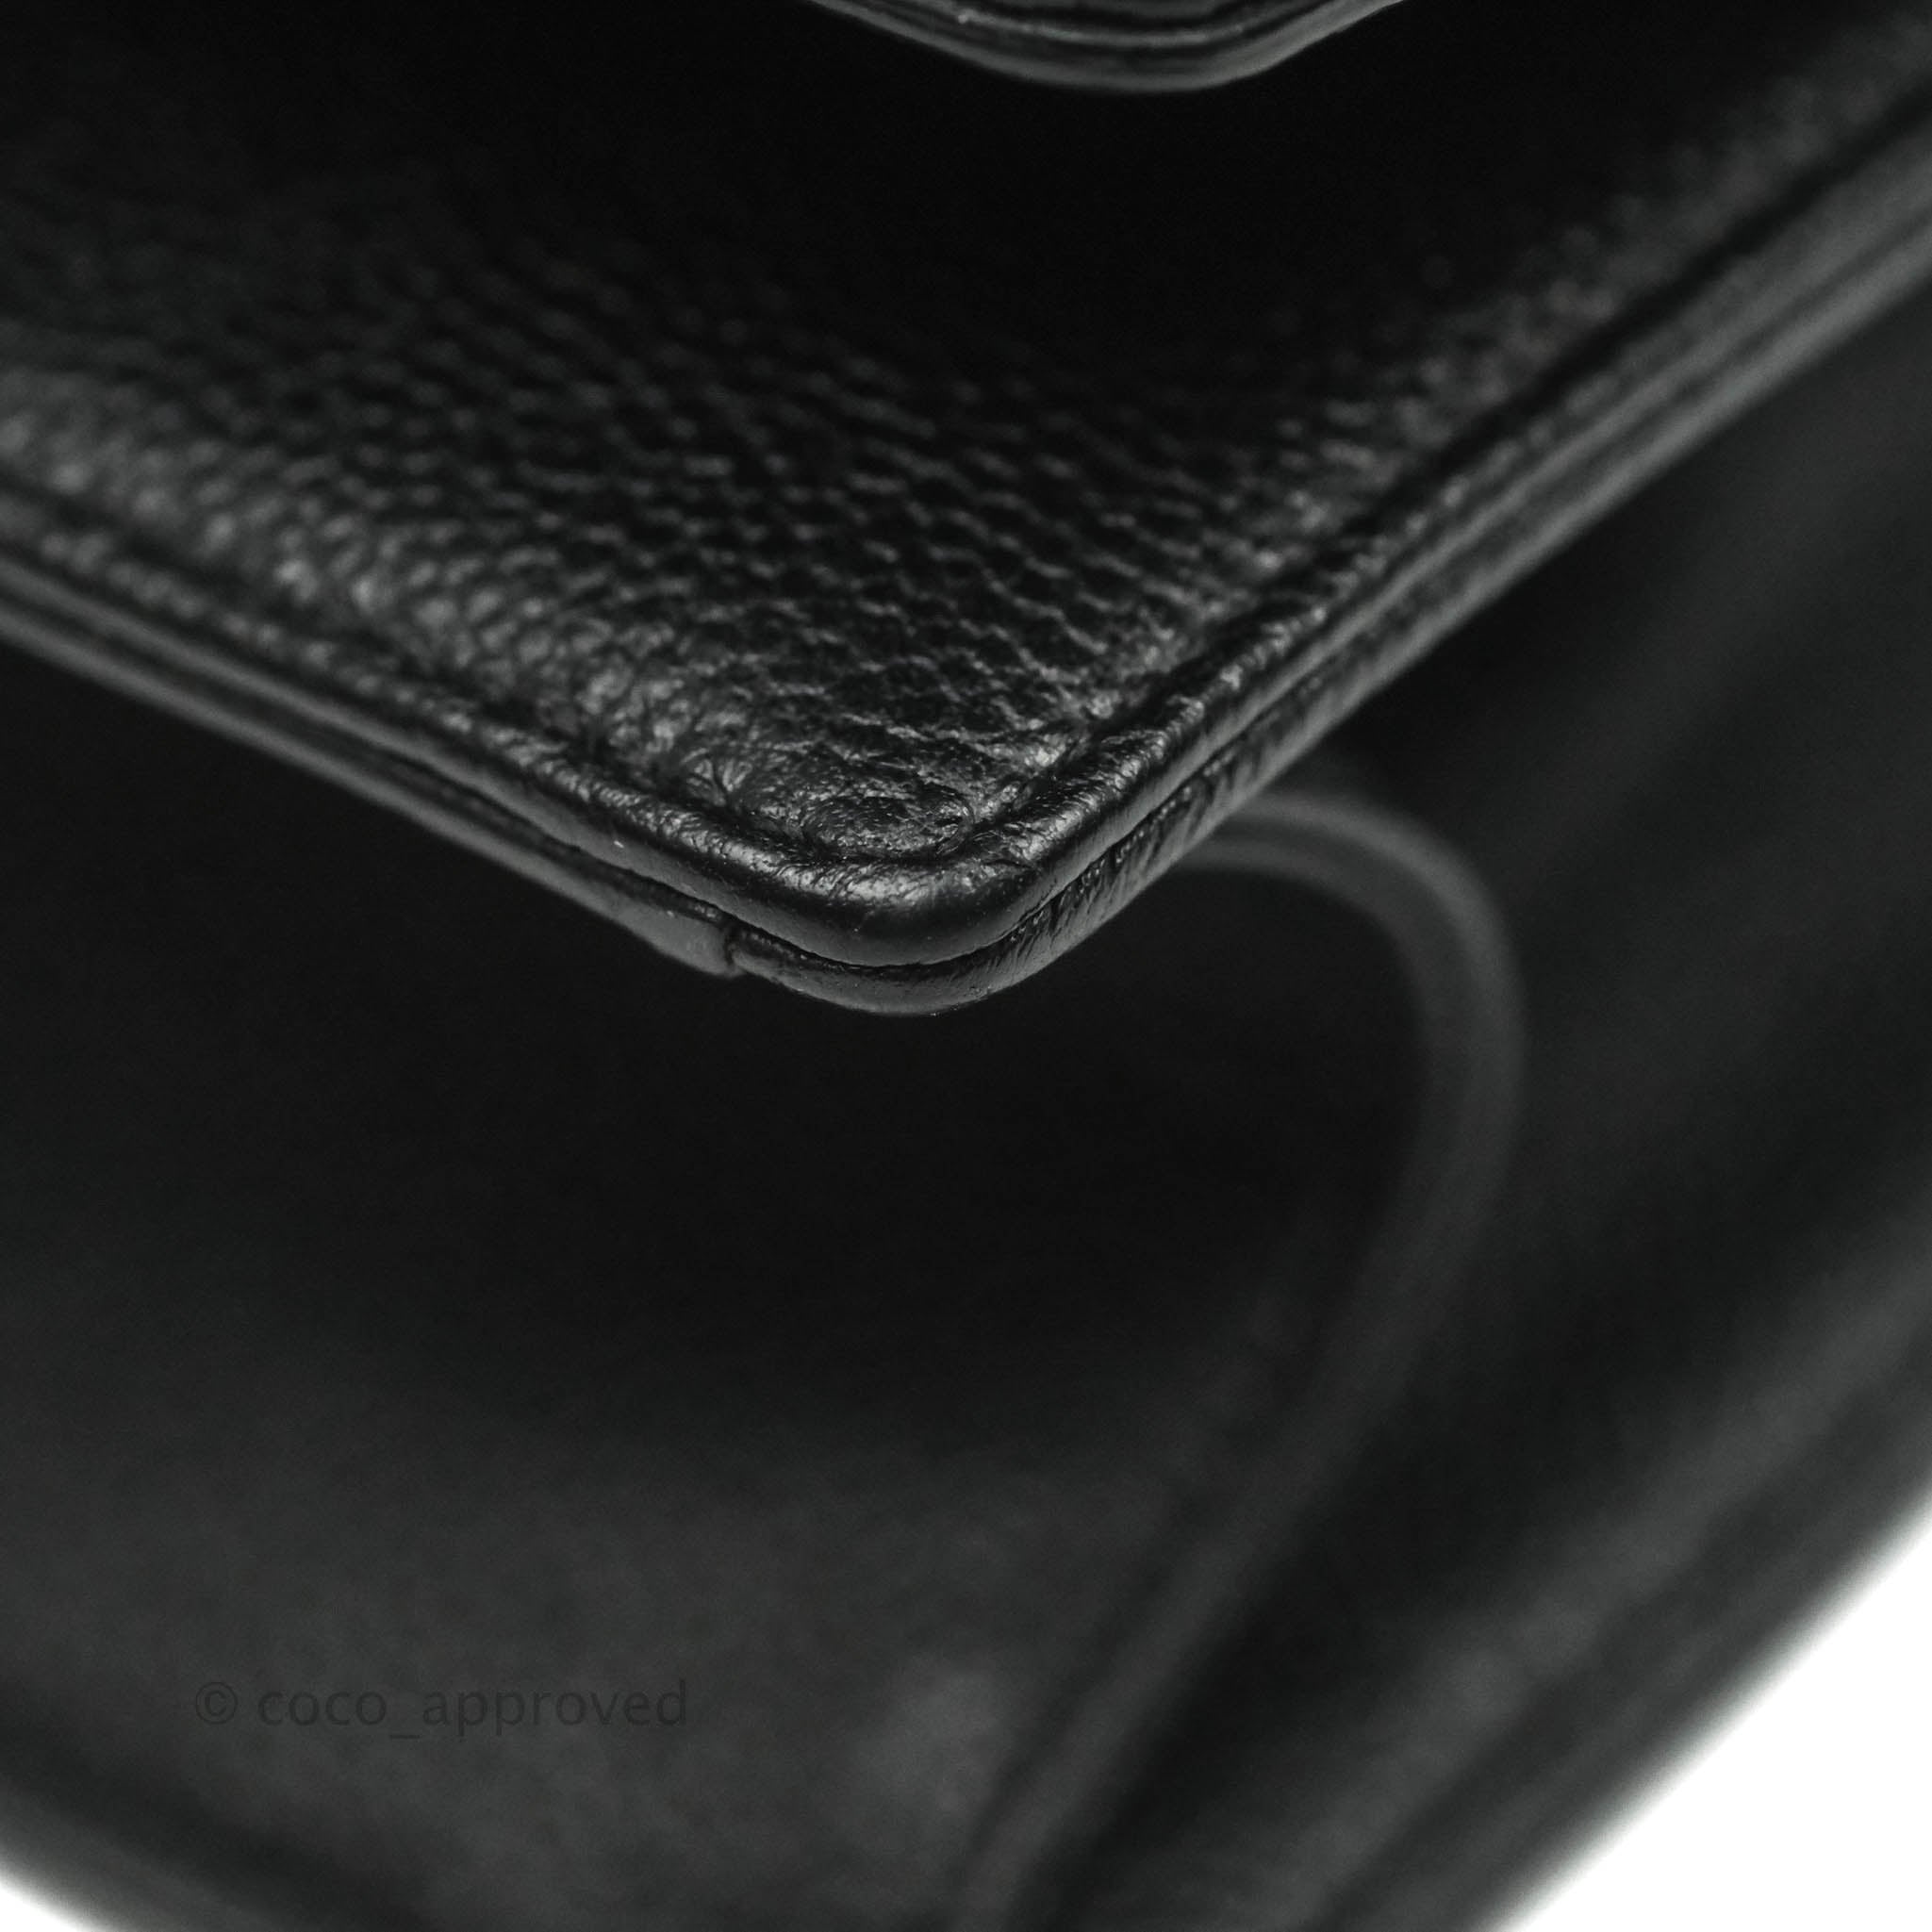 Christian Dior Leather Medium Diorama Shoulder Bag - Neutrals Shoulder Bags,  Handbags - CHR339175